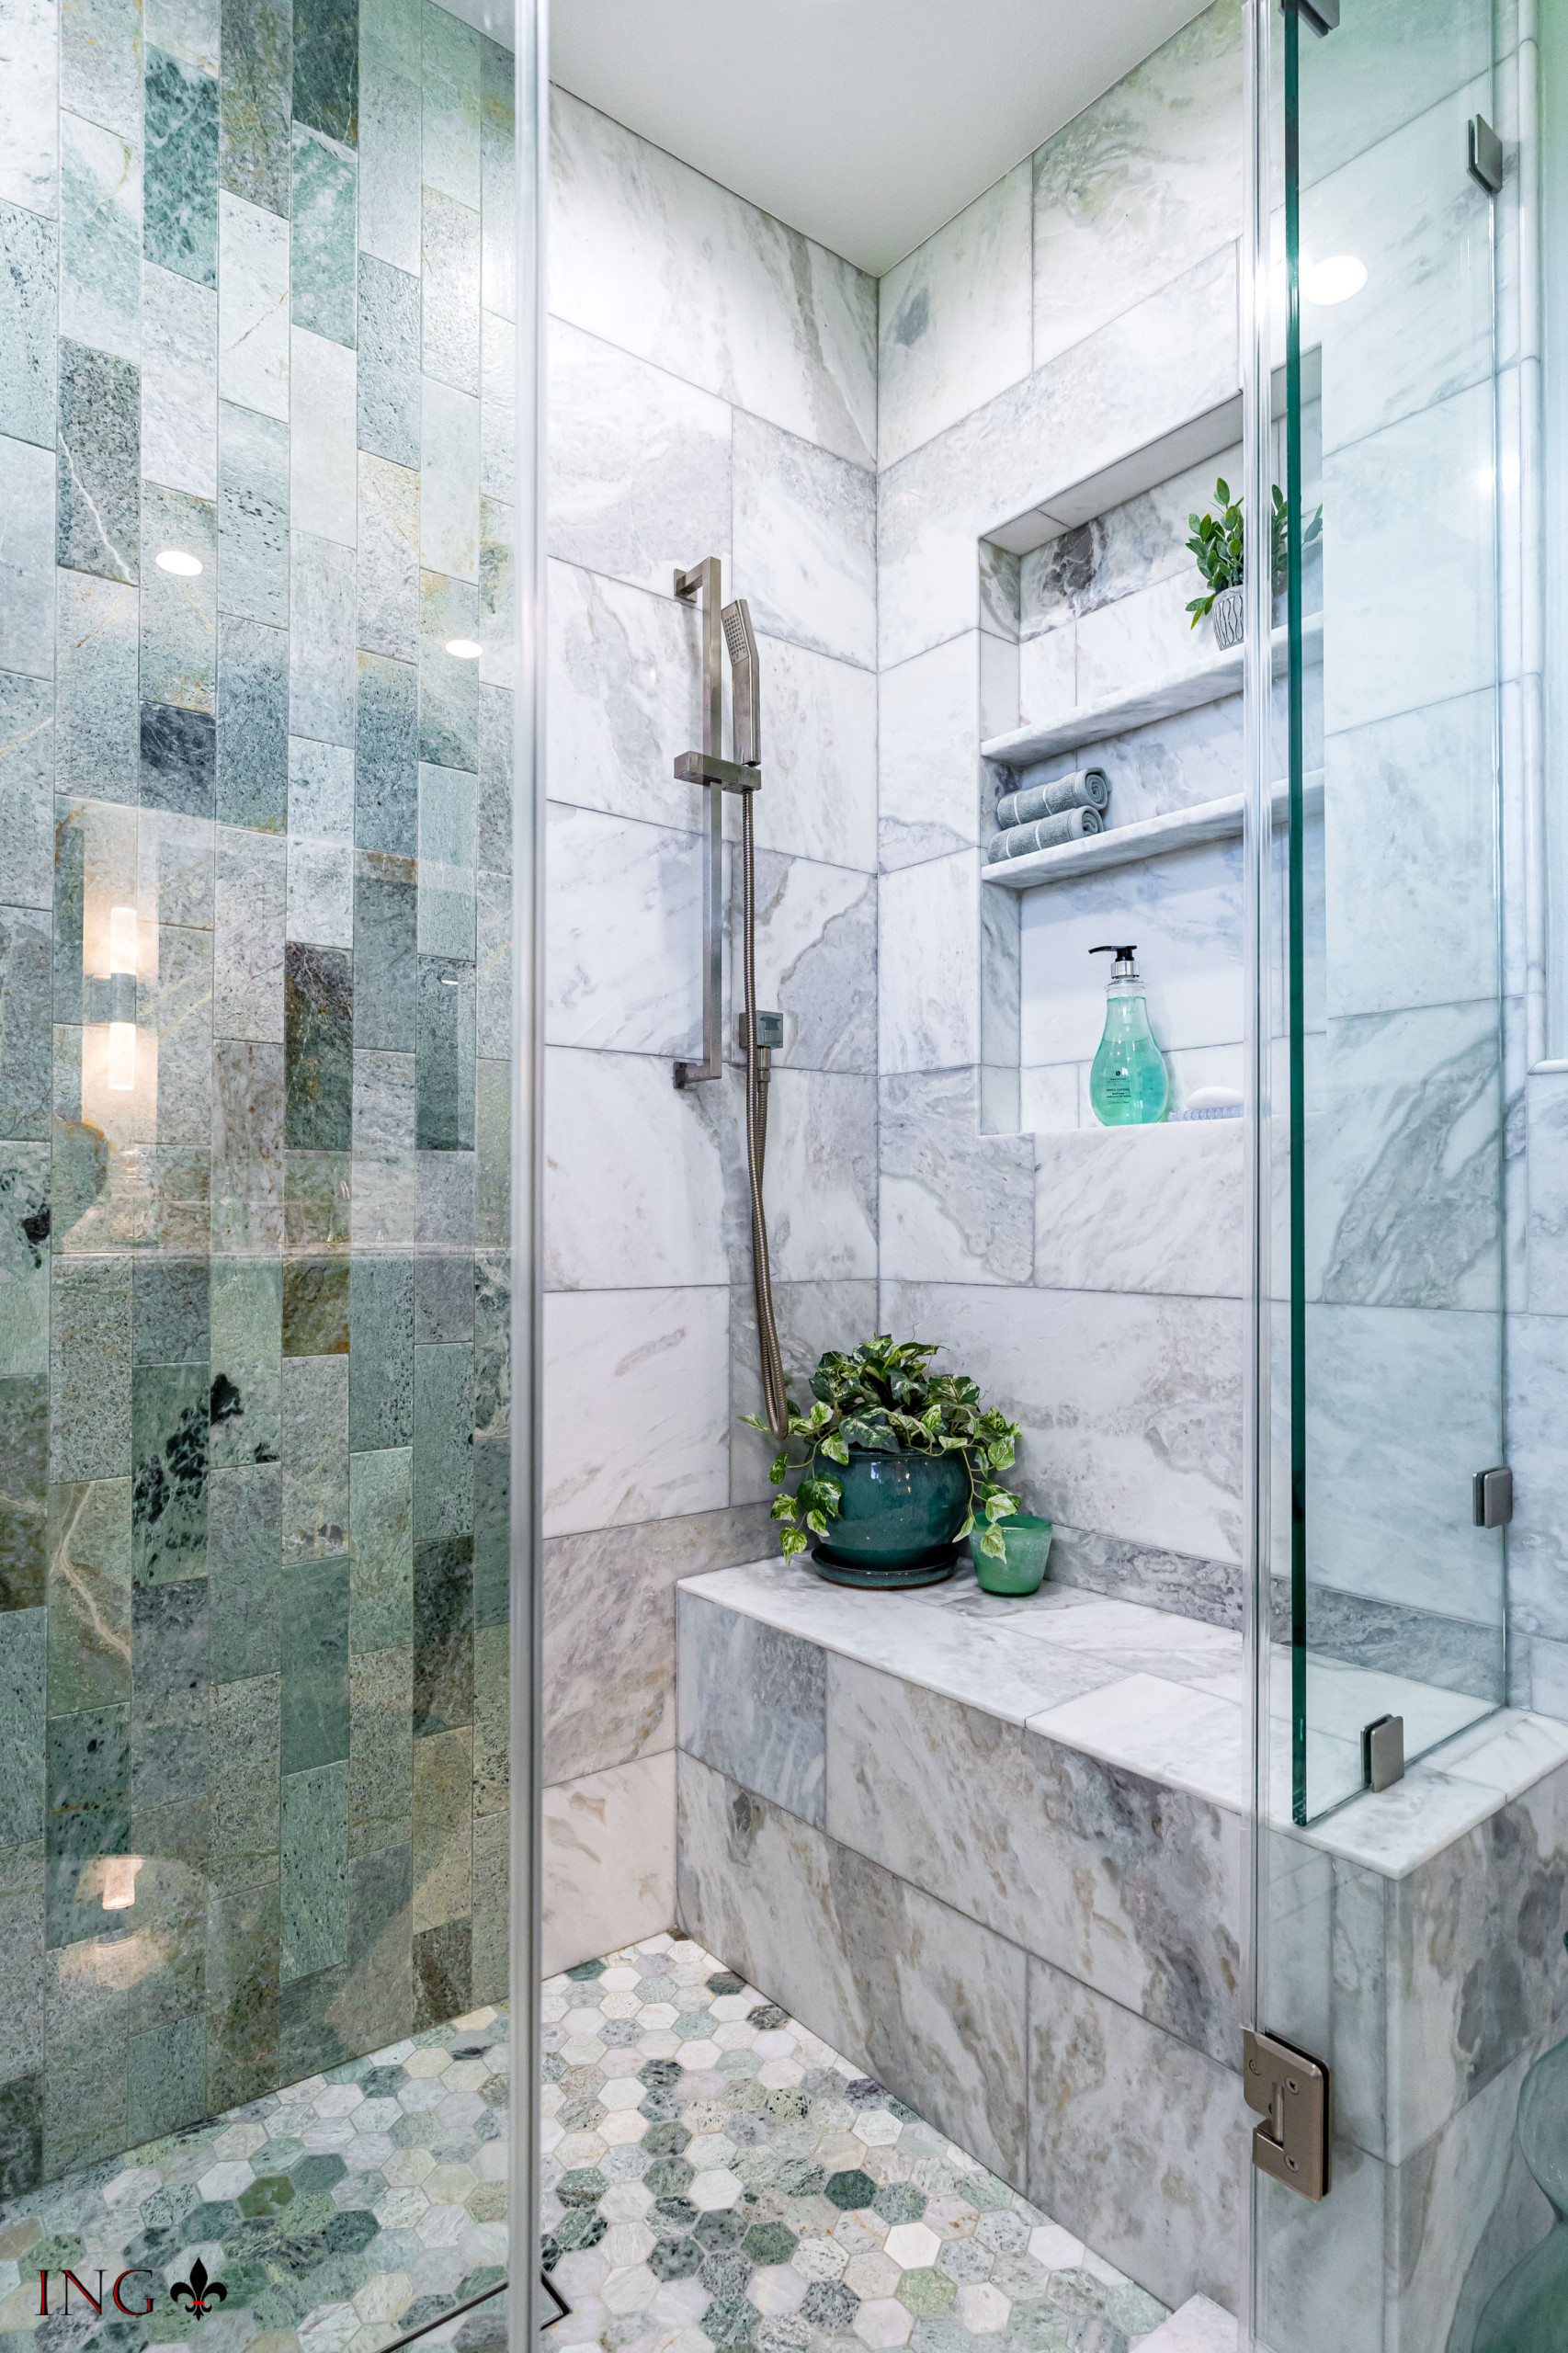 Shower Installation / Shower Tile, Enclosure and Fixtures